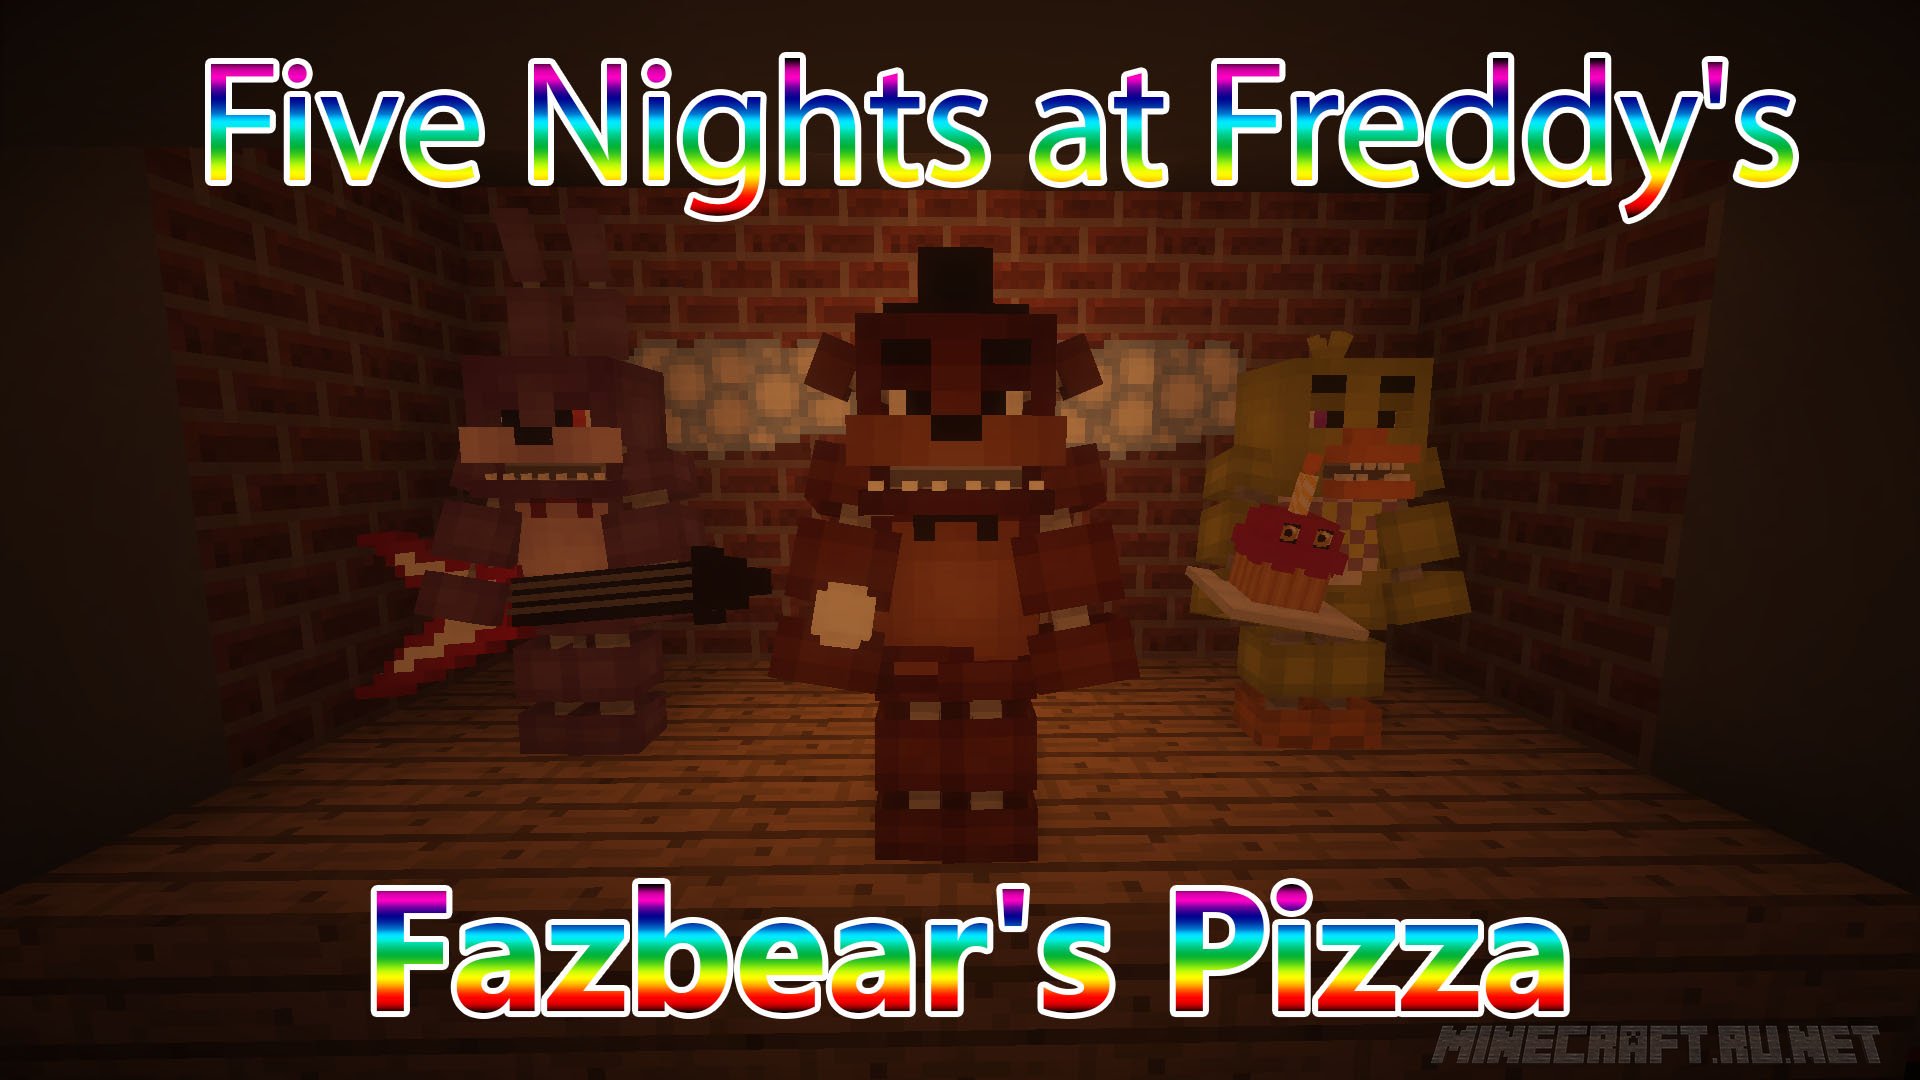 Майнкрафт Five Nights at Freddy's - Fazbear's Pizza (FNAF)